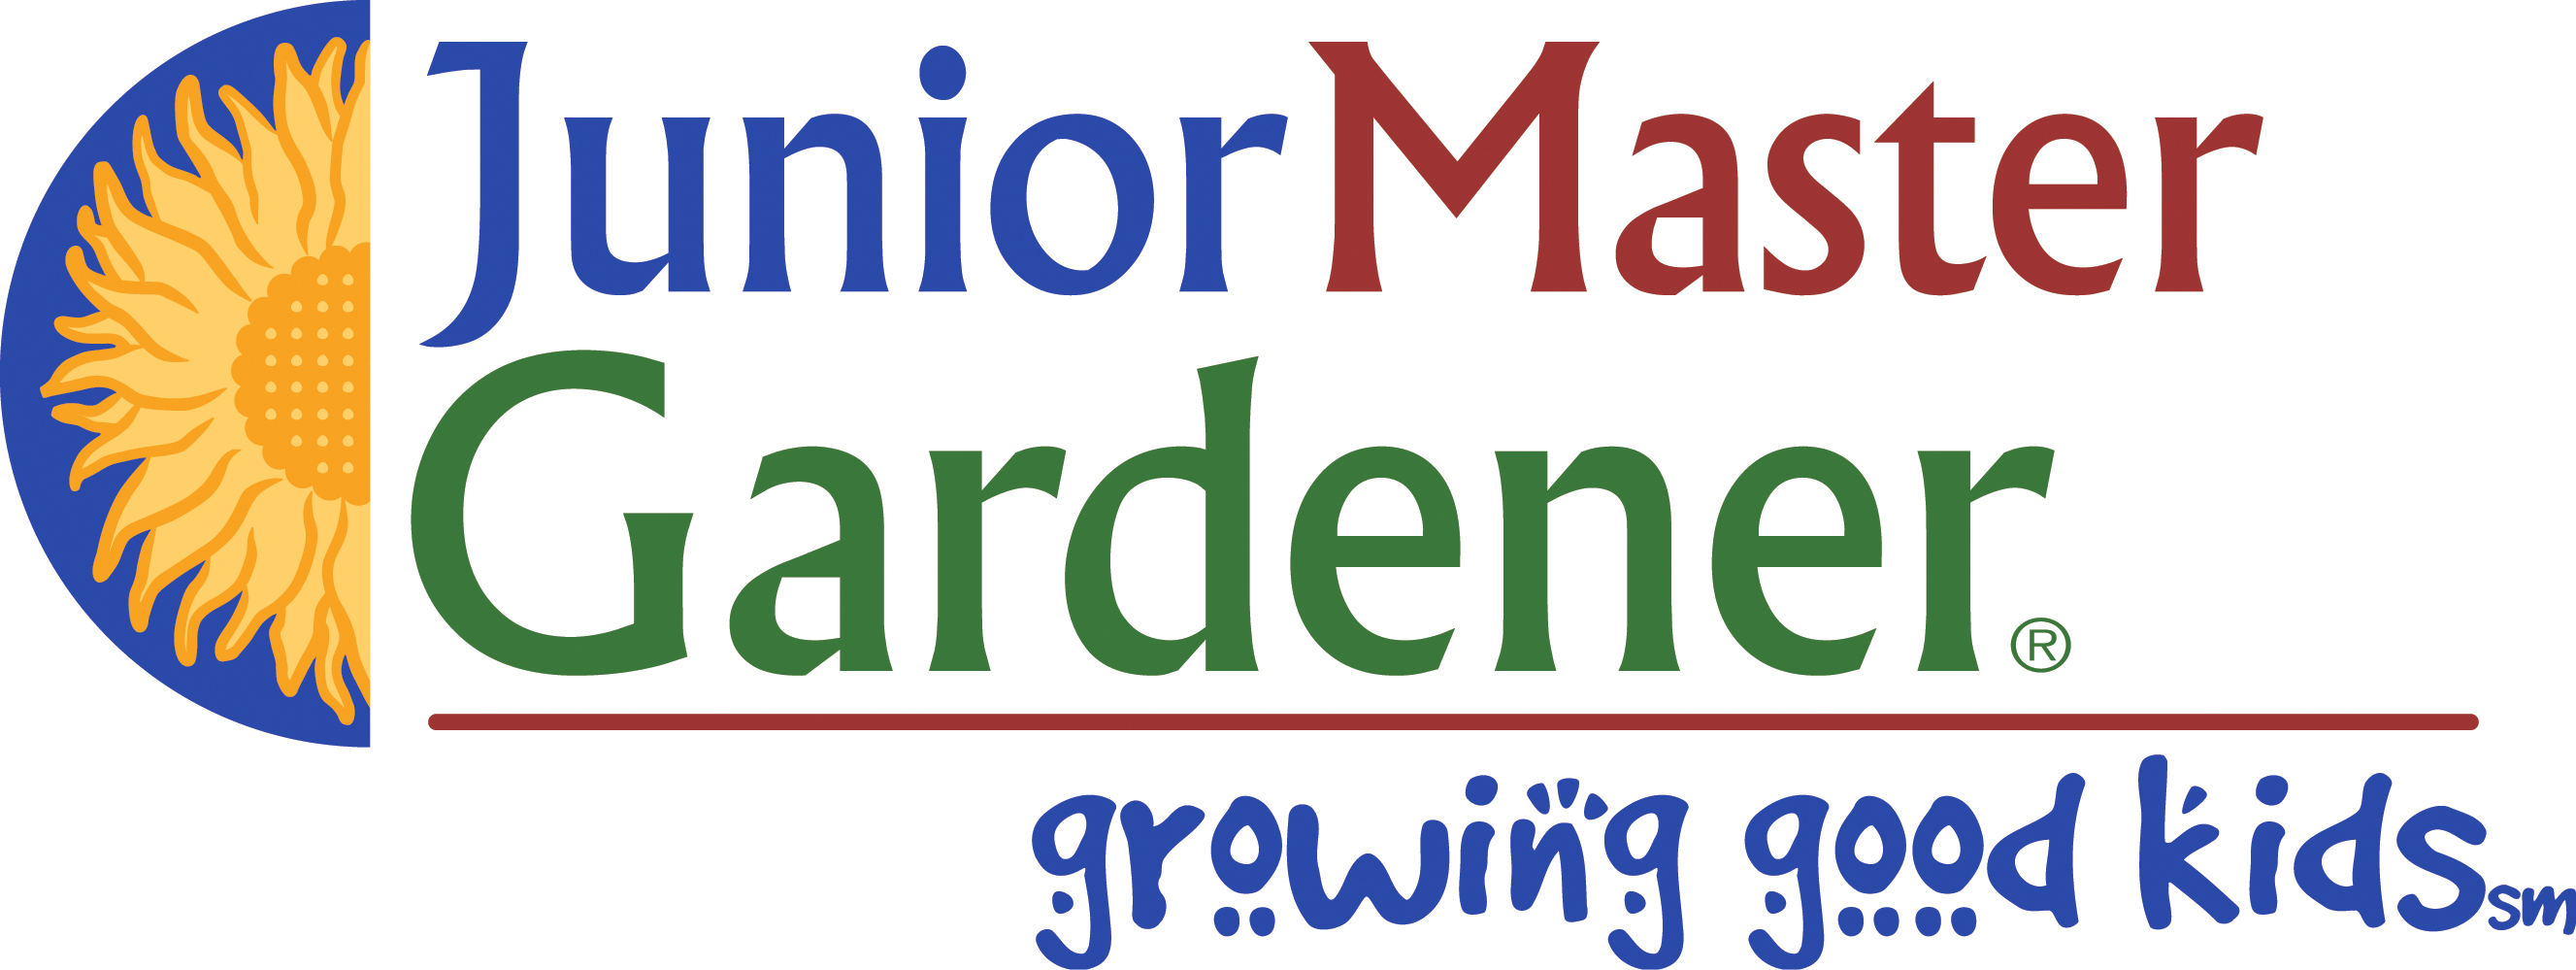 Junior Master Gardener logo